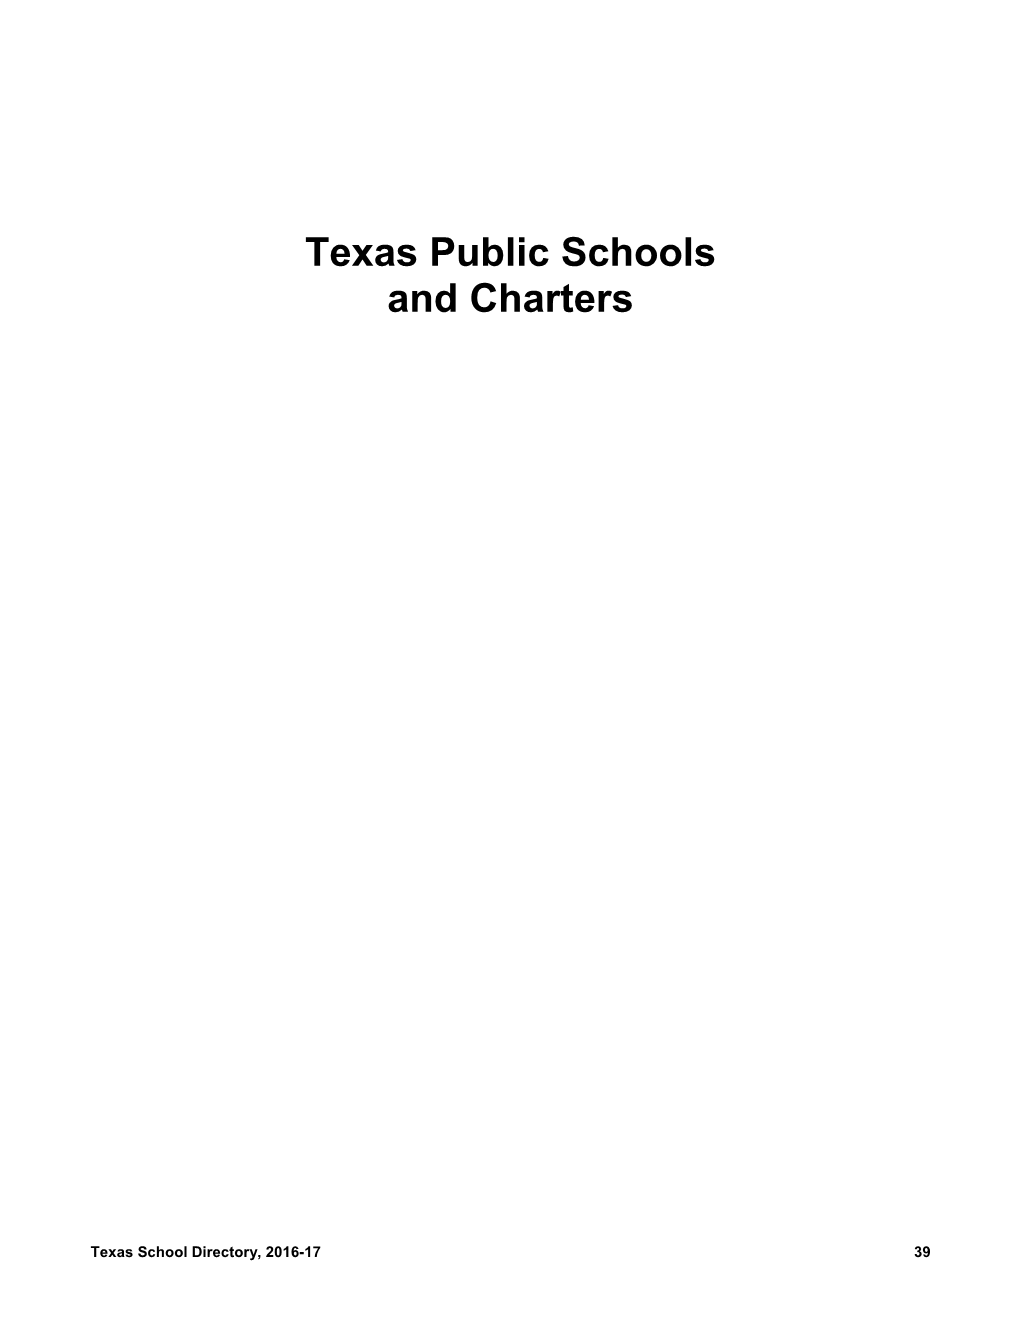 Texas Public Schools and Charters